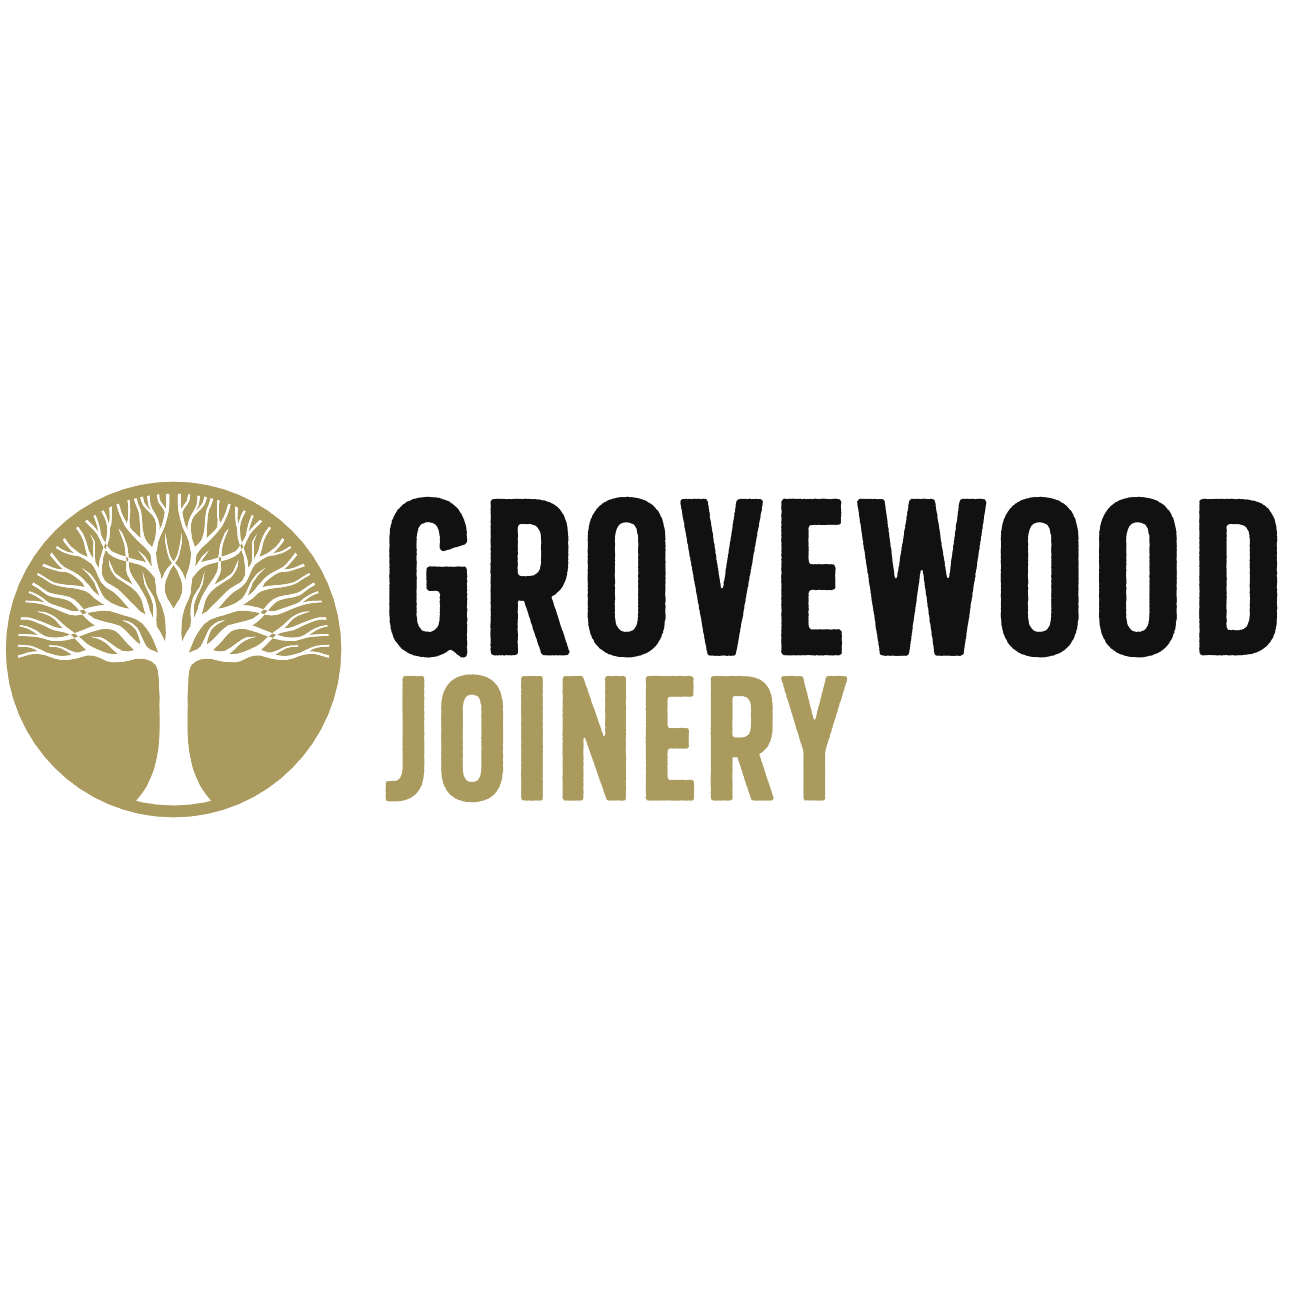 Grovewood Joinery Ltd - Wembley, London HA9 7ND - 020 8908 0040 | ShowMeLocal.com